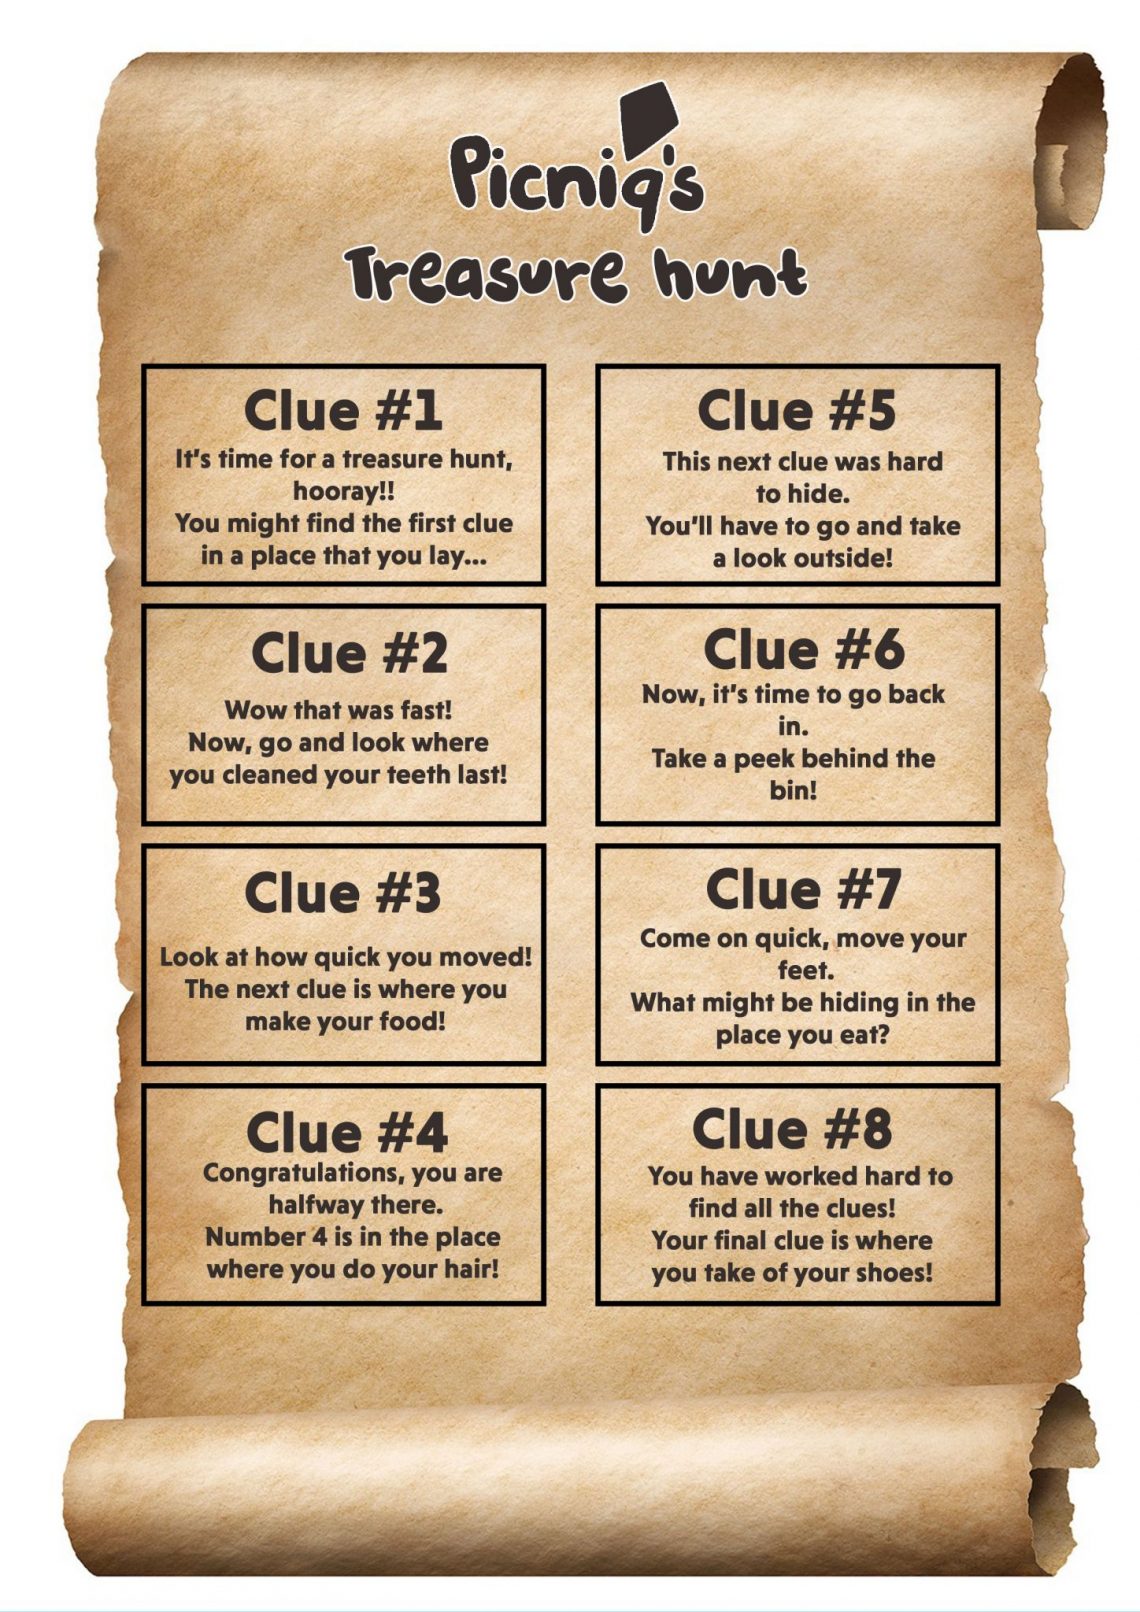 Treasure hunt clues printable - Picniq Blog